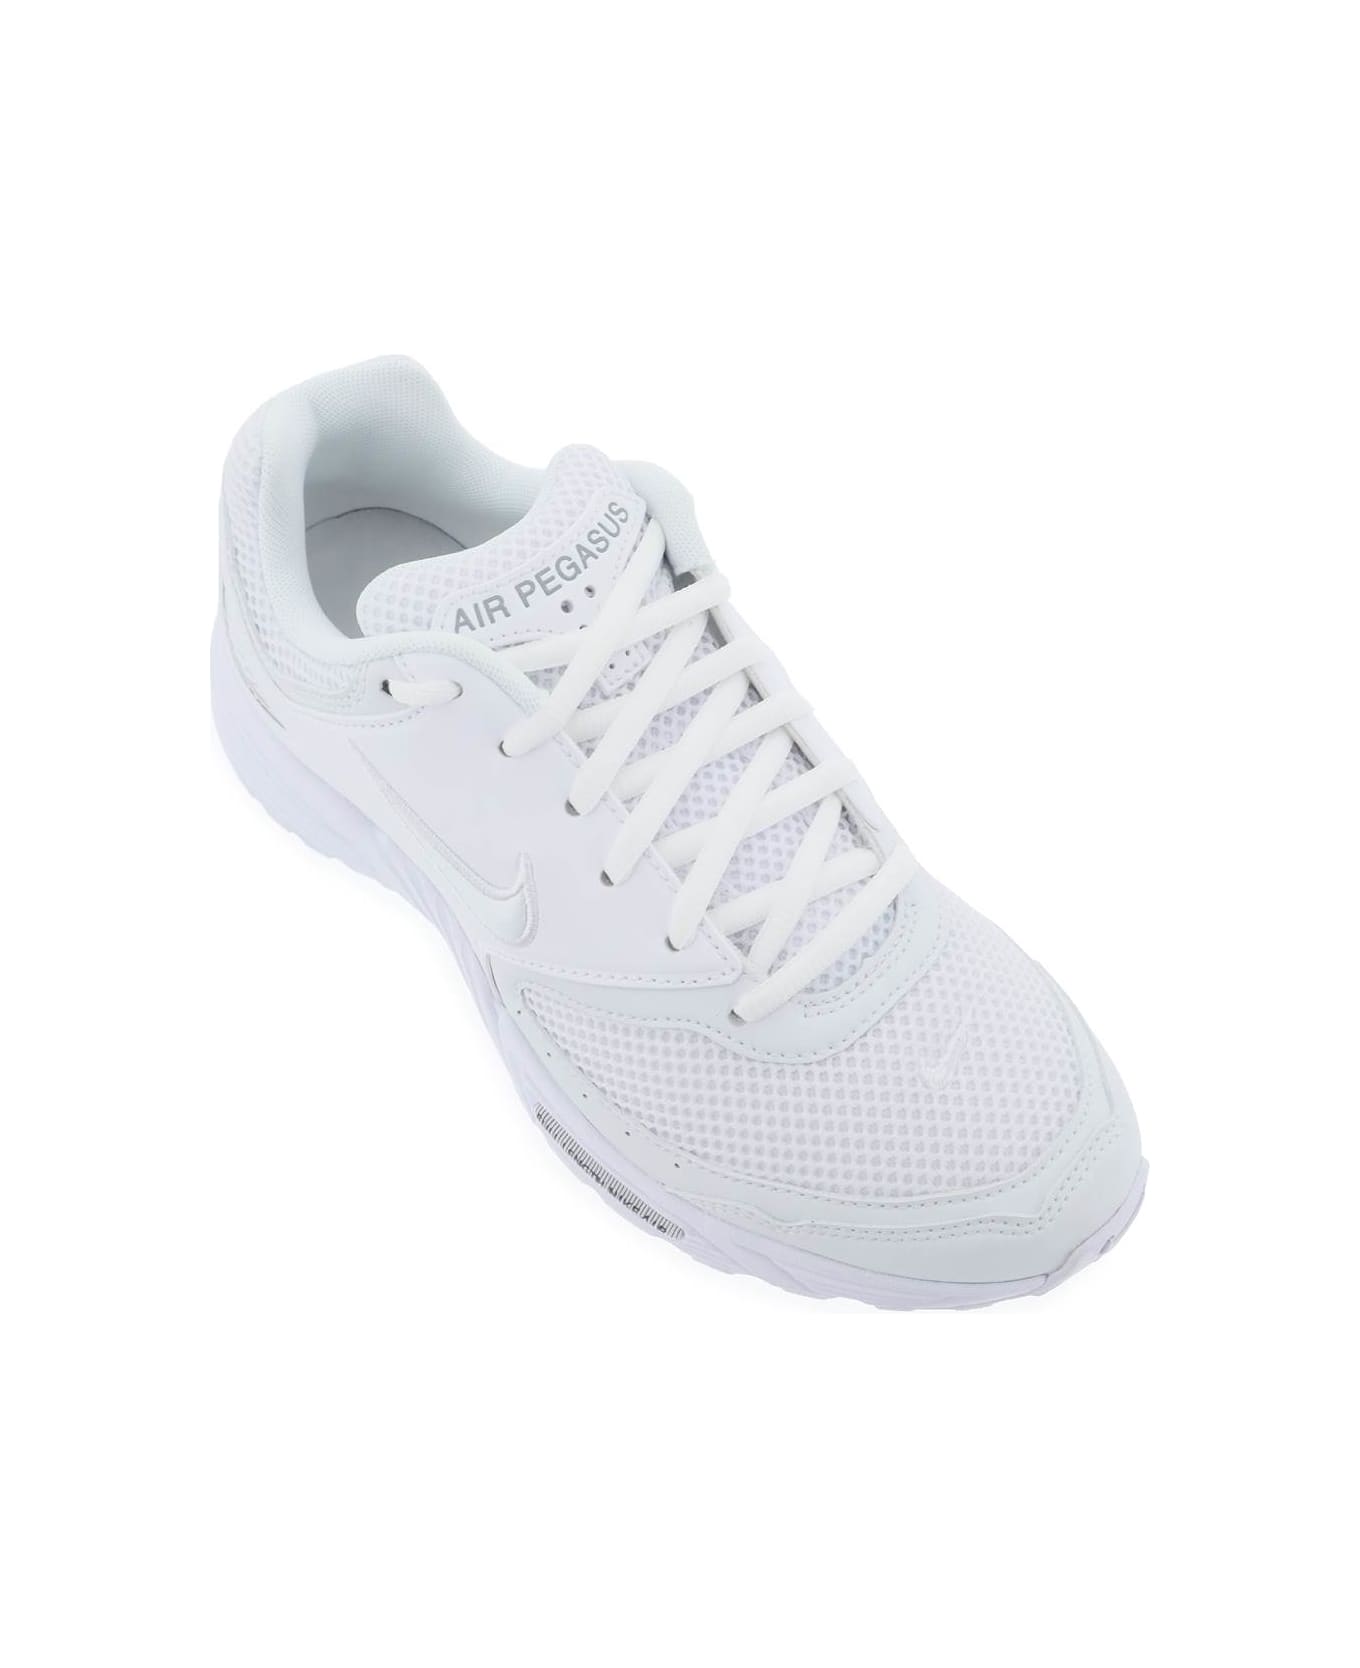 Comme Des Garçons Homme Plus Air Pegasus monster 2005 Sp Sneakers X Nike - WHITE (White)